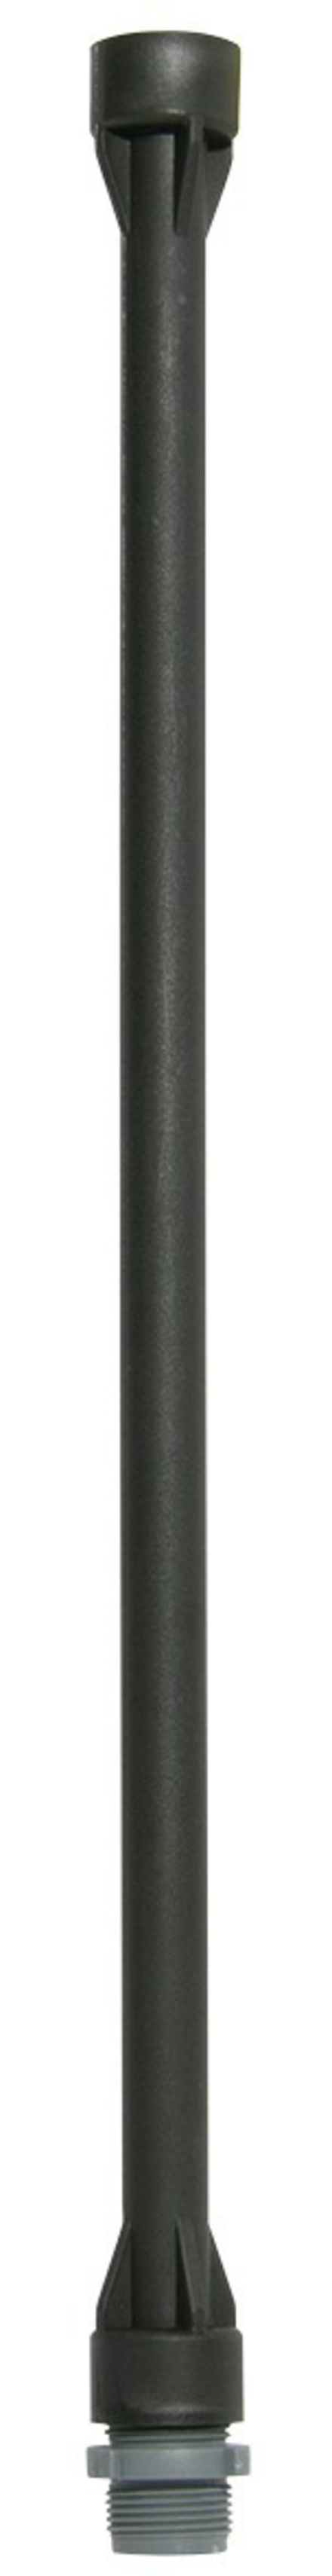 Rallonge 40 cm pour lance viton pour taliapulvé viton TALIAPLAST - 404451